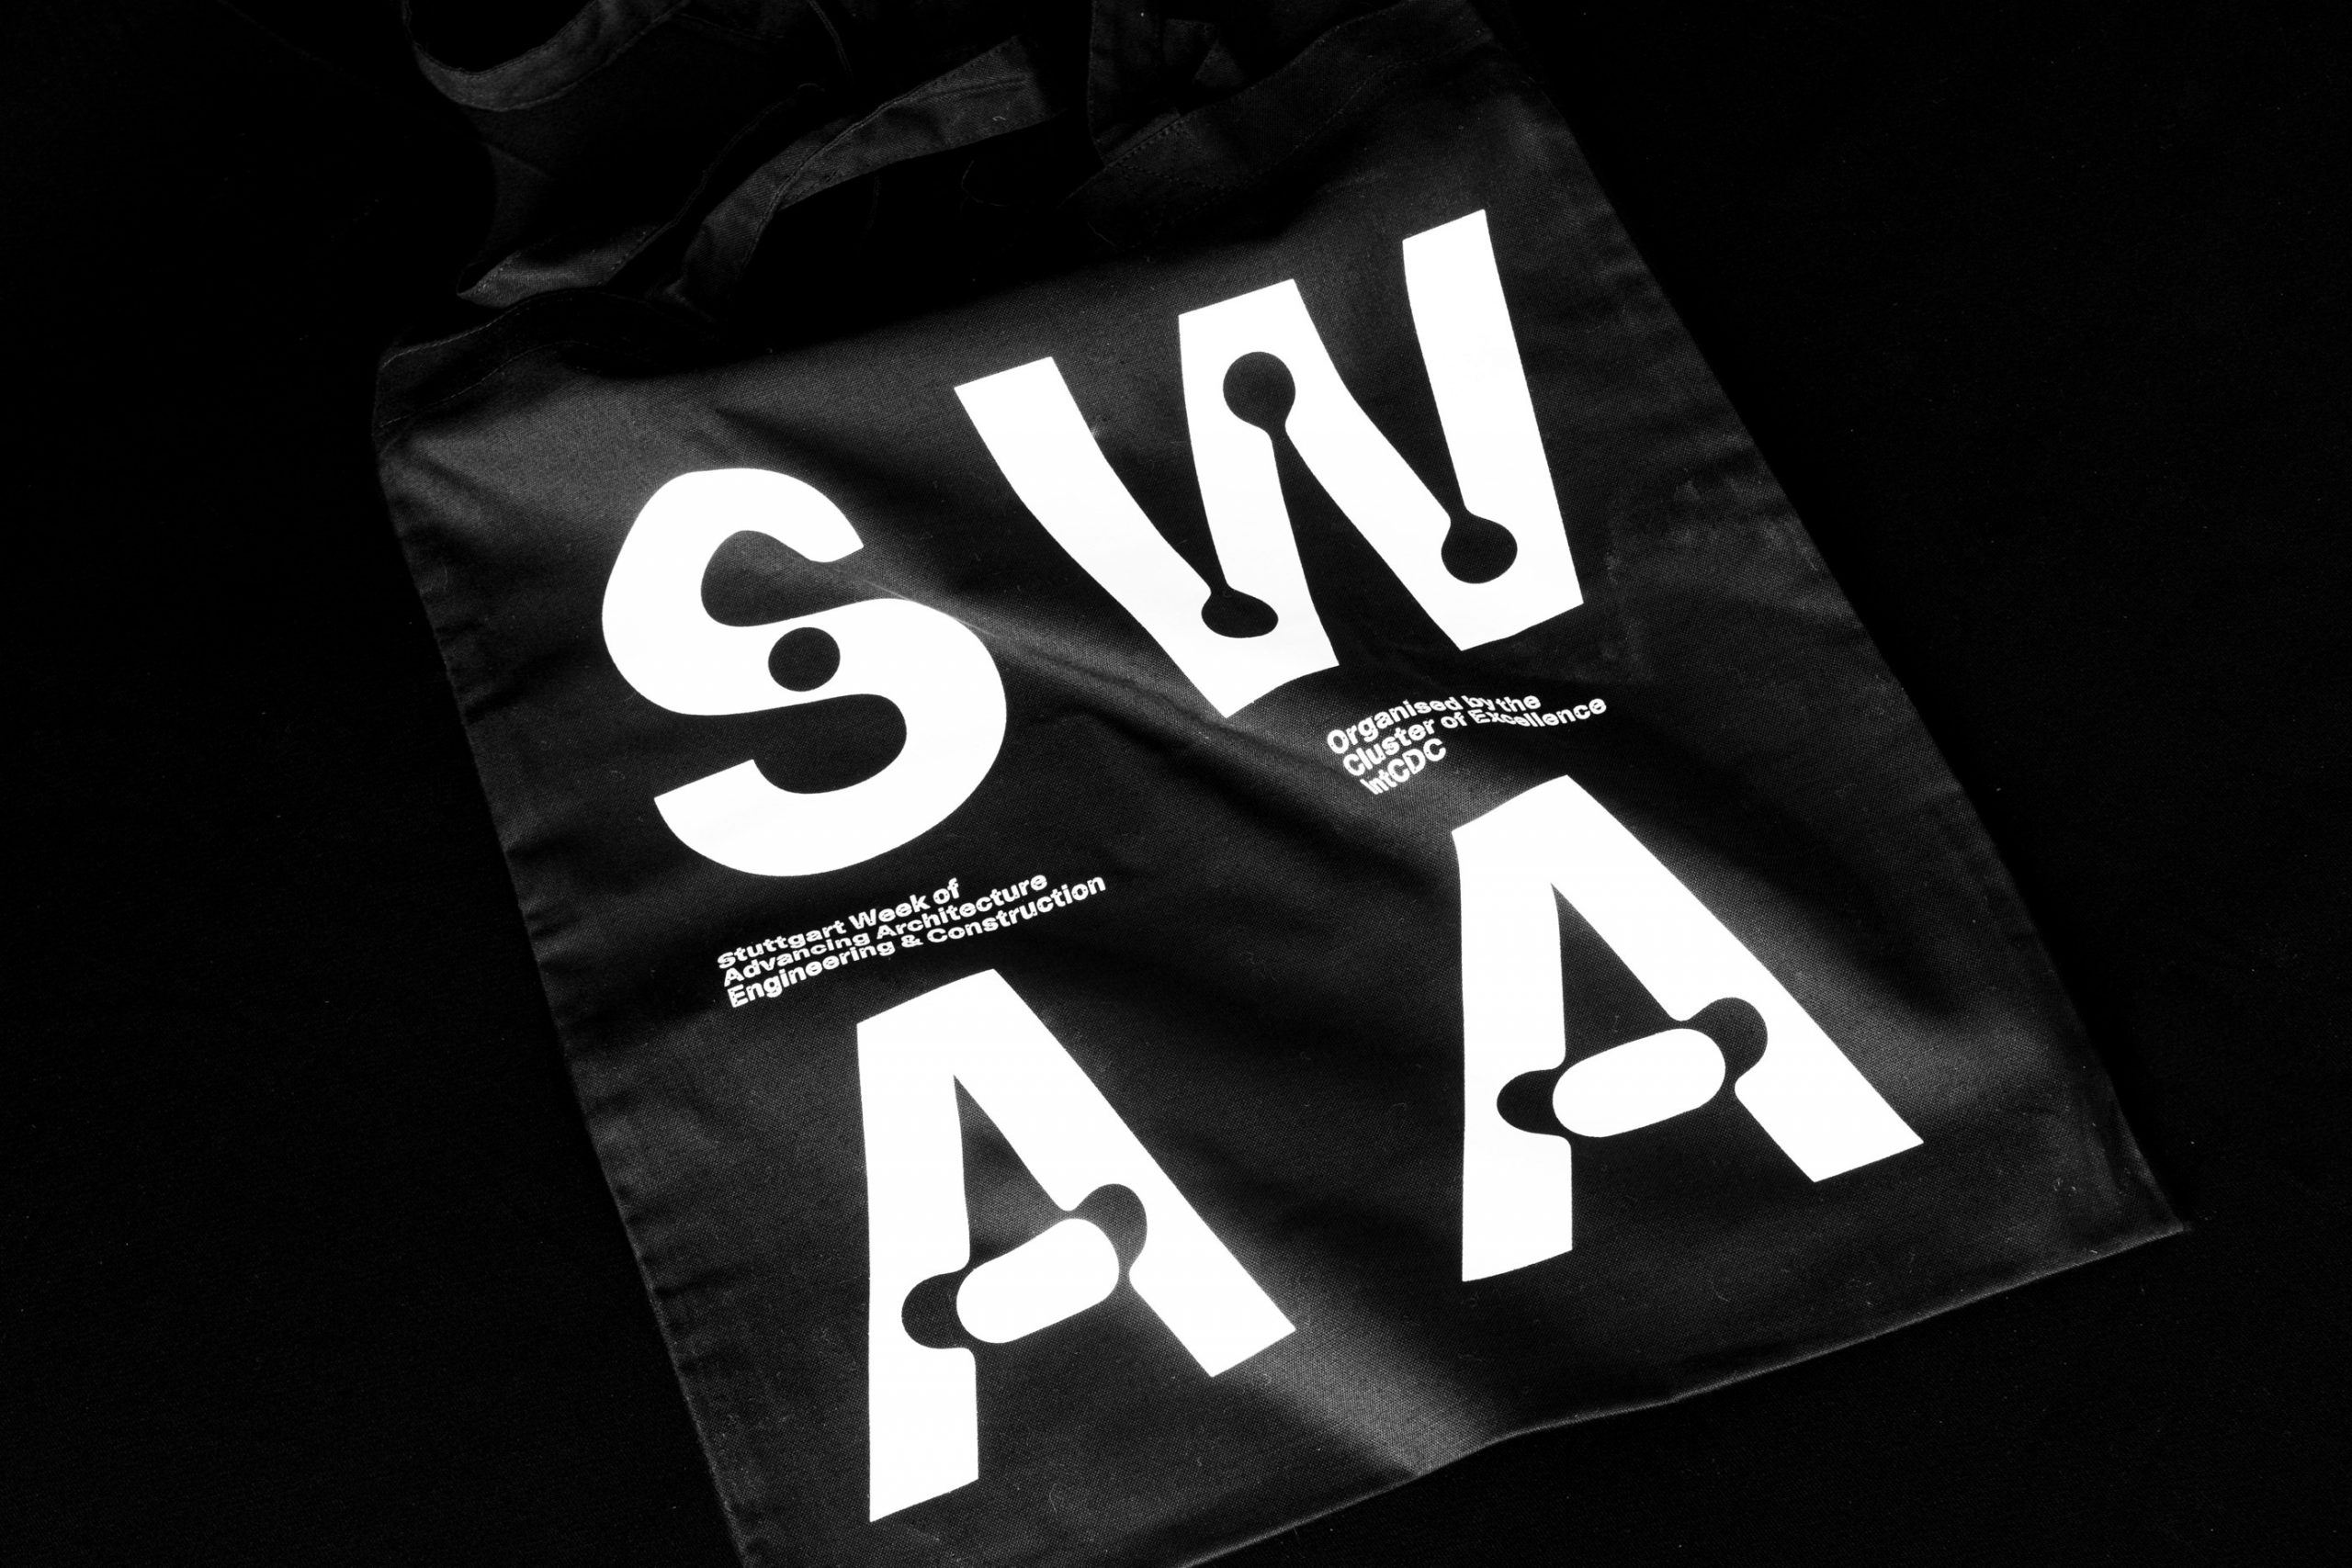 Tote bag design for SWAA, silkscreen printed